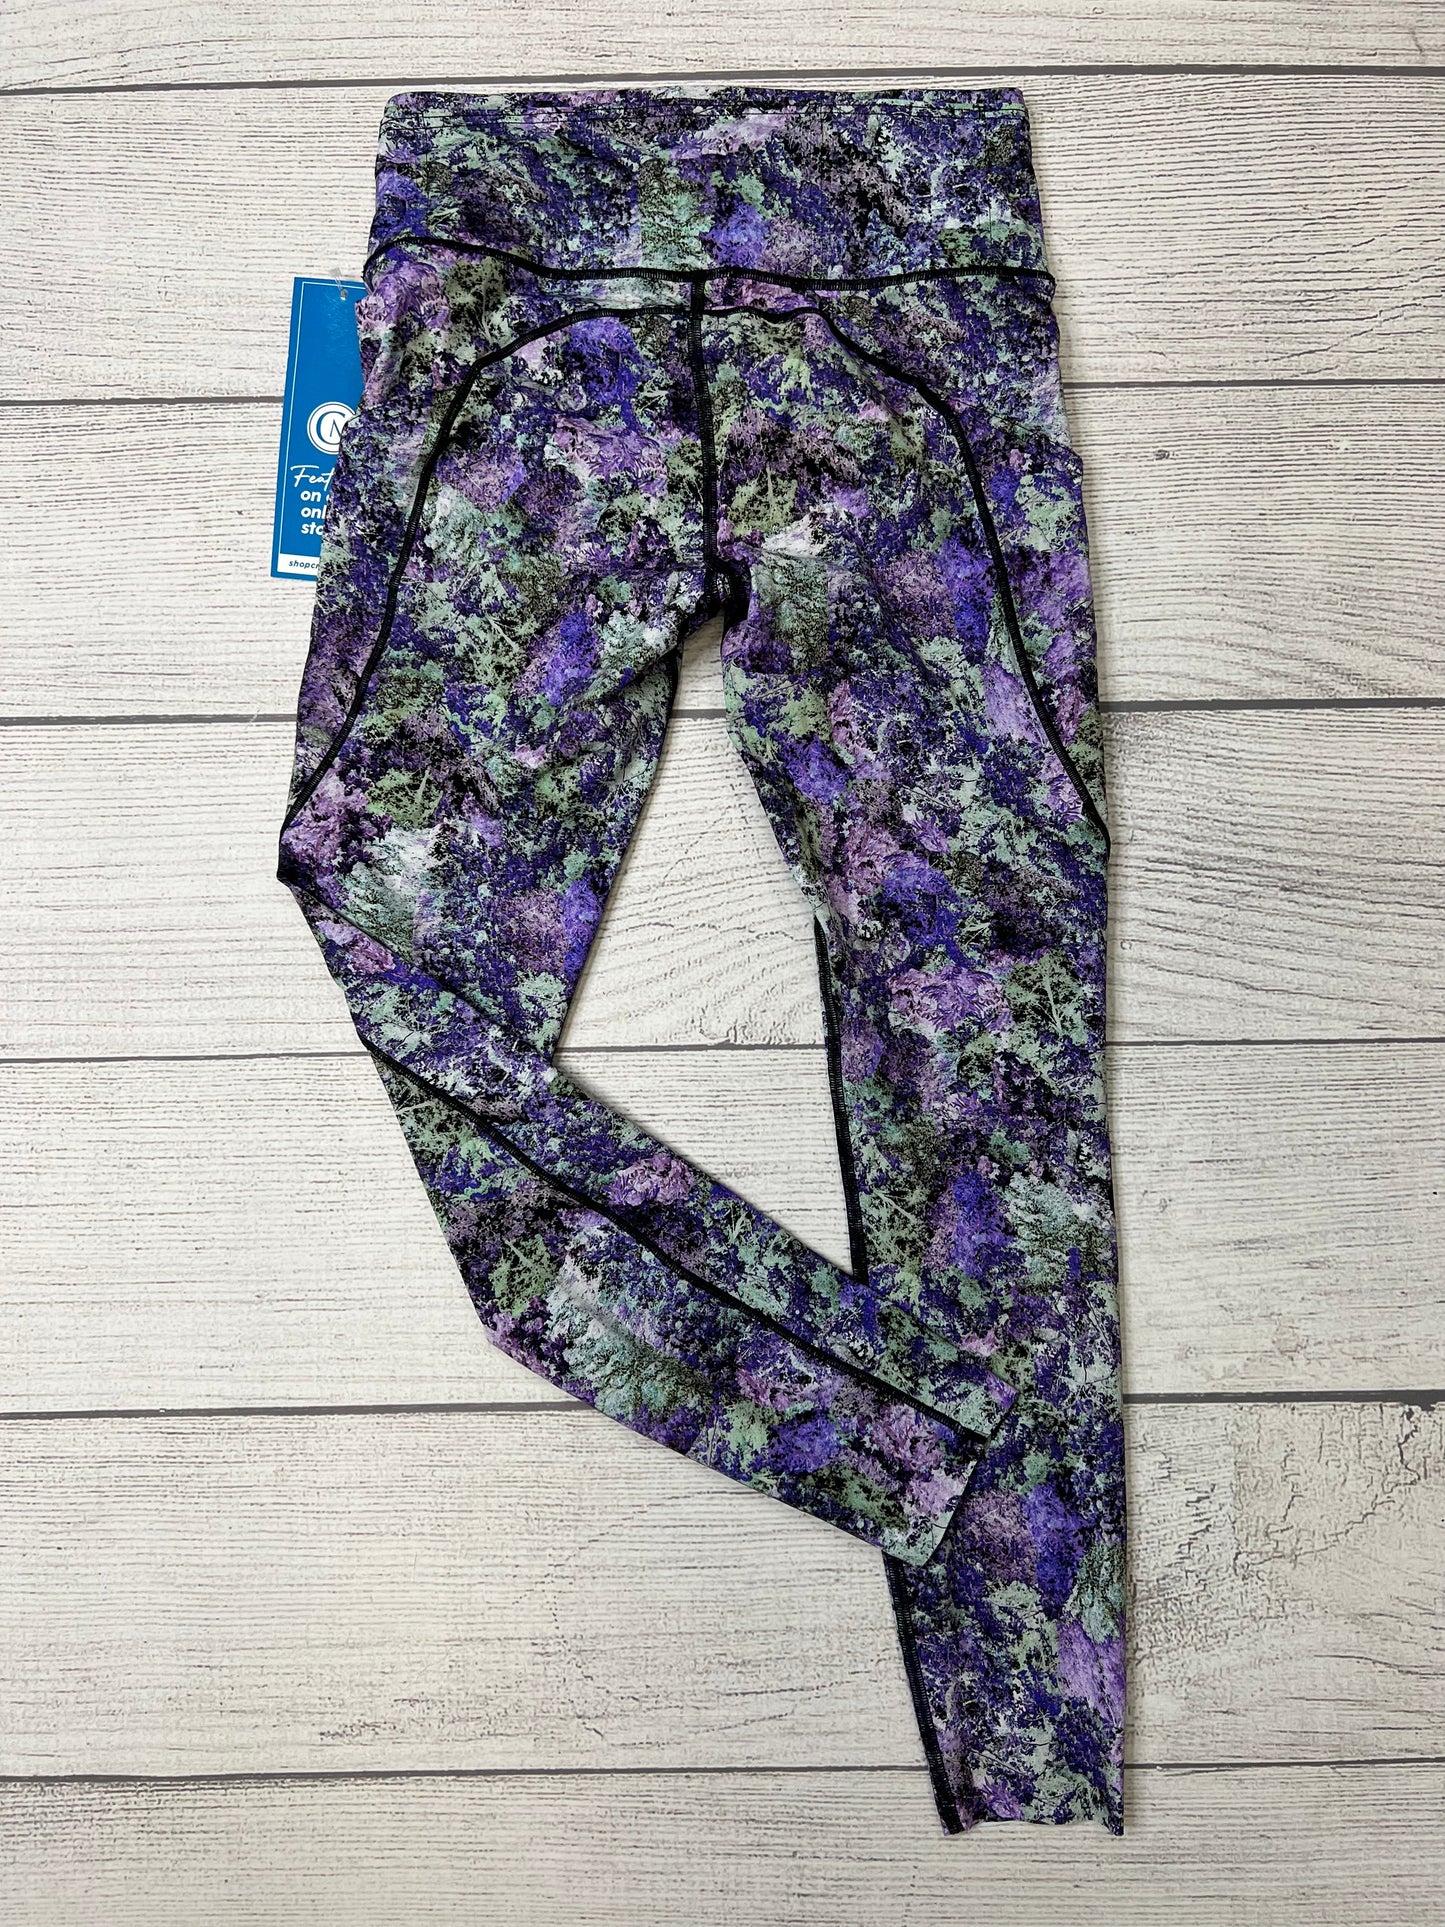 Purple Athletic Pants Lululemon, Size M